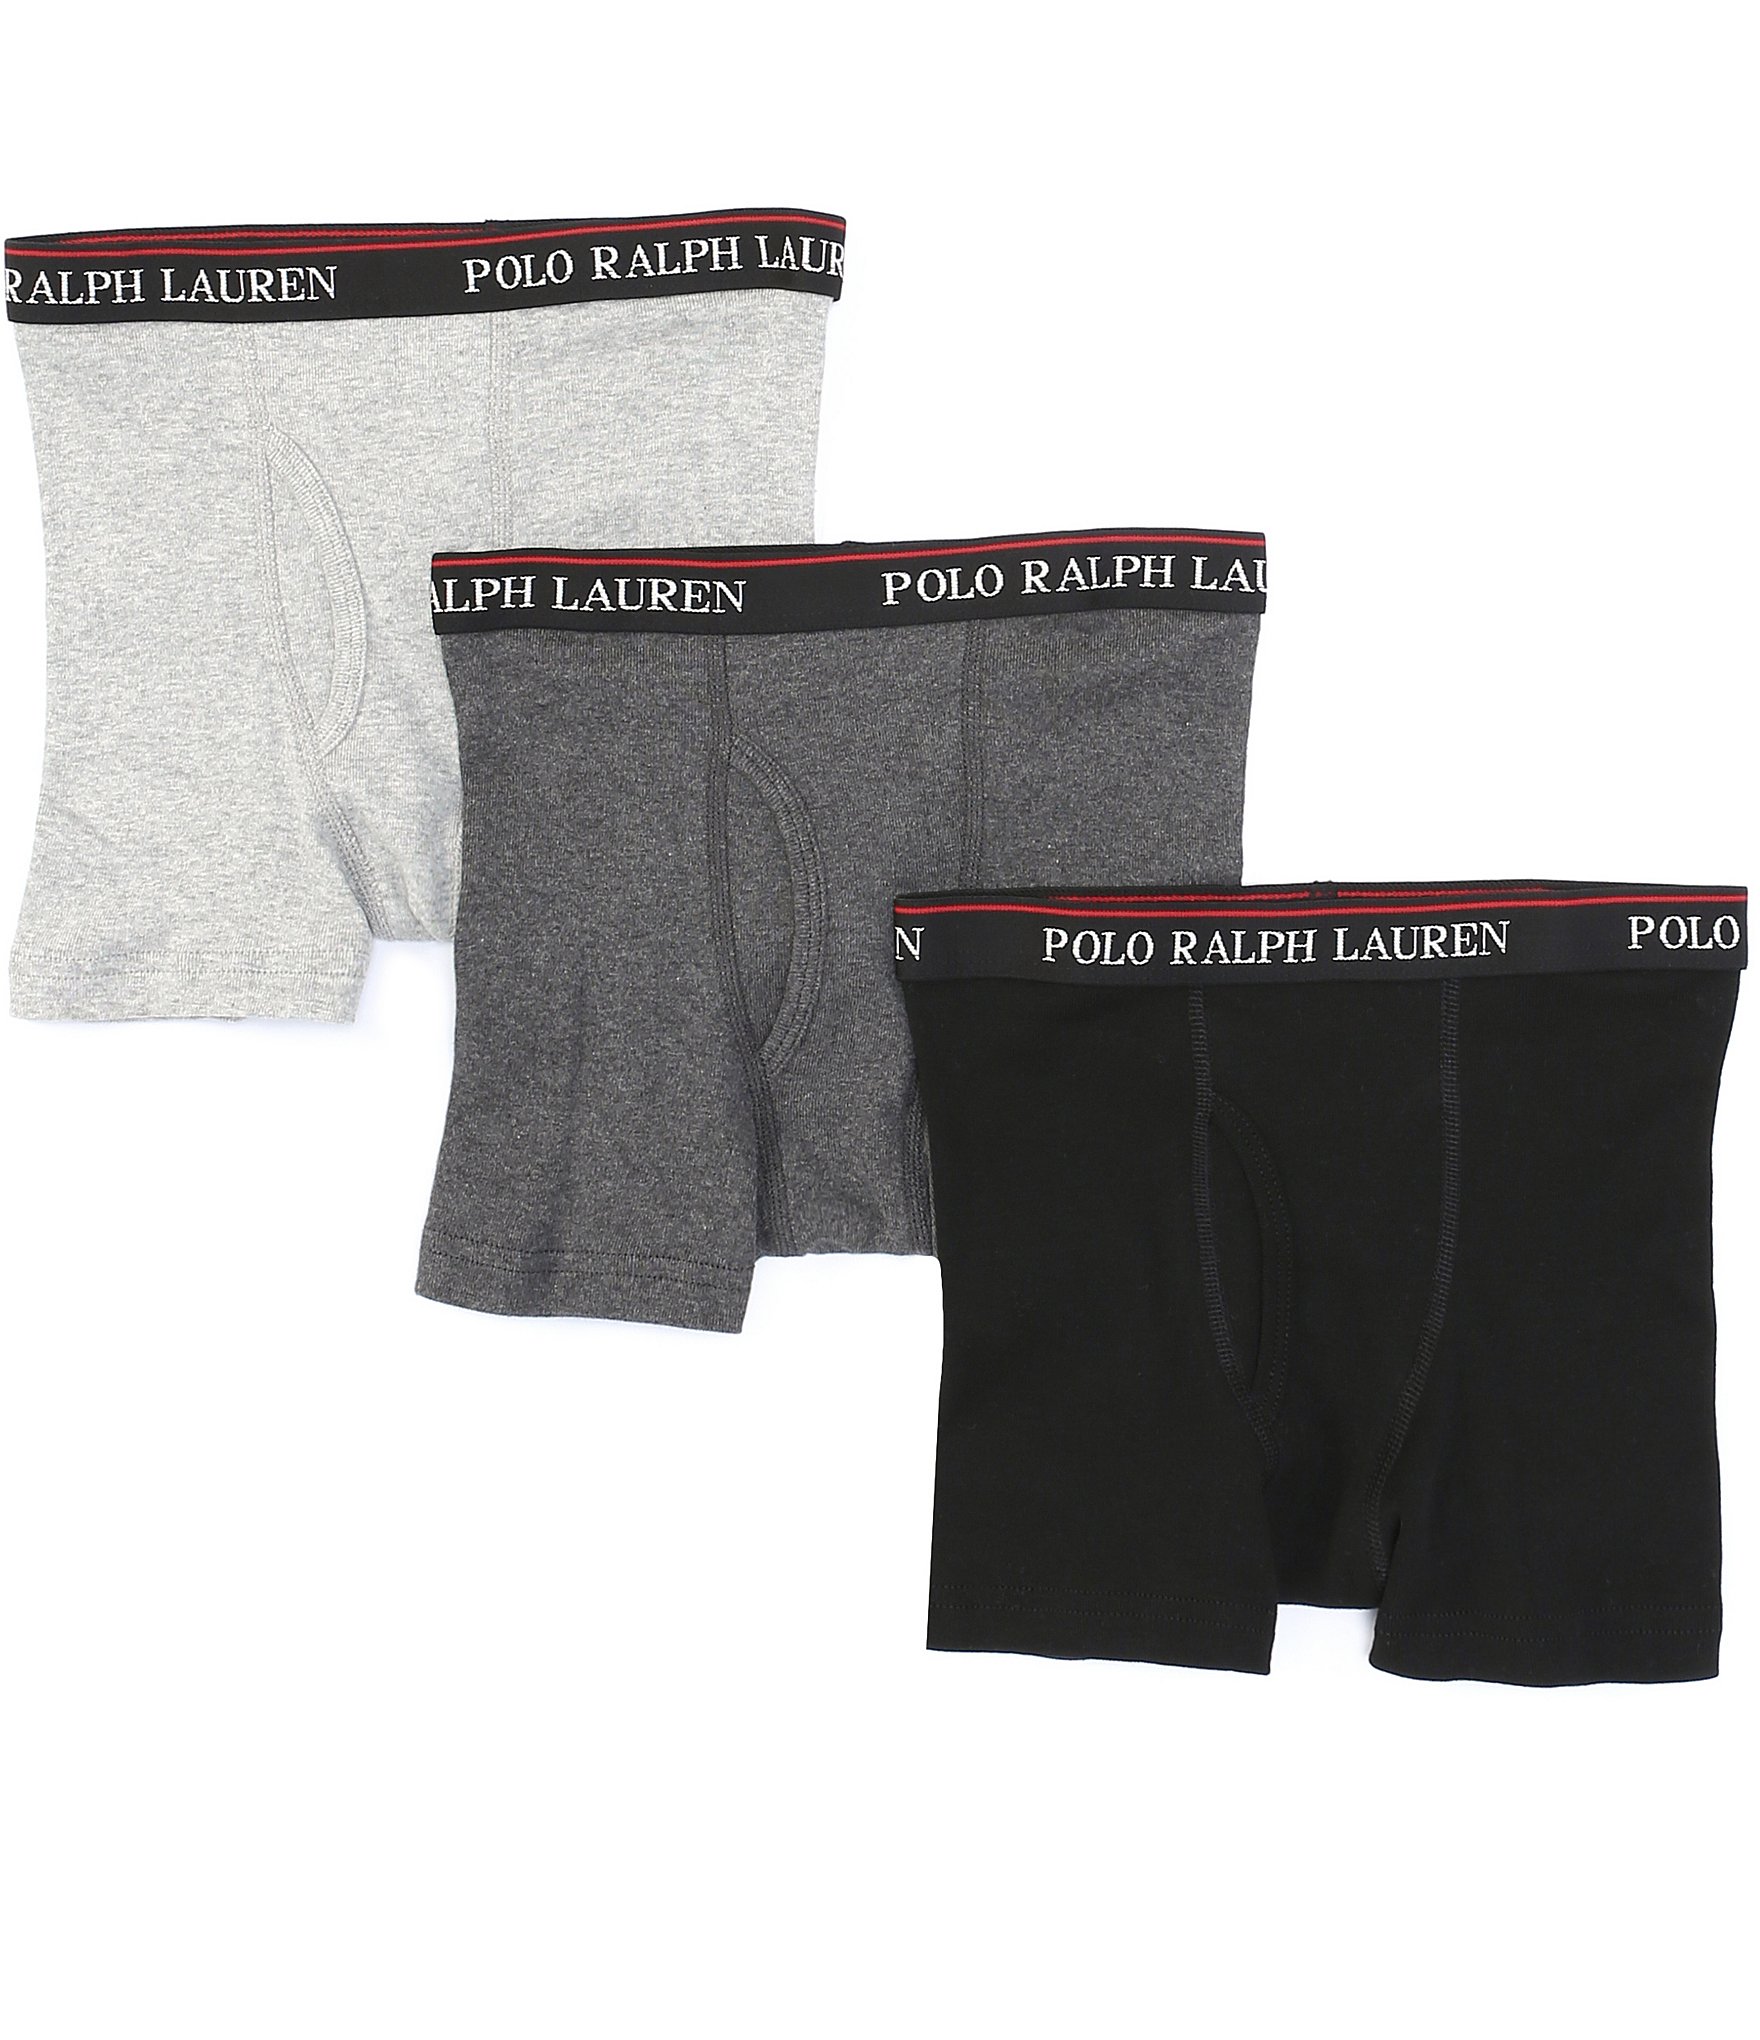 Polo Ralph Lauren Little/Big Boys 4-20 Assorted Stretch Boxer Briefs 3-Pack